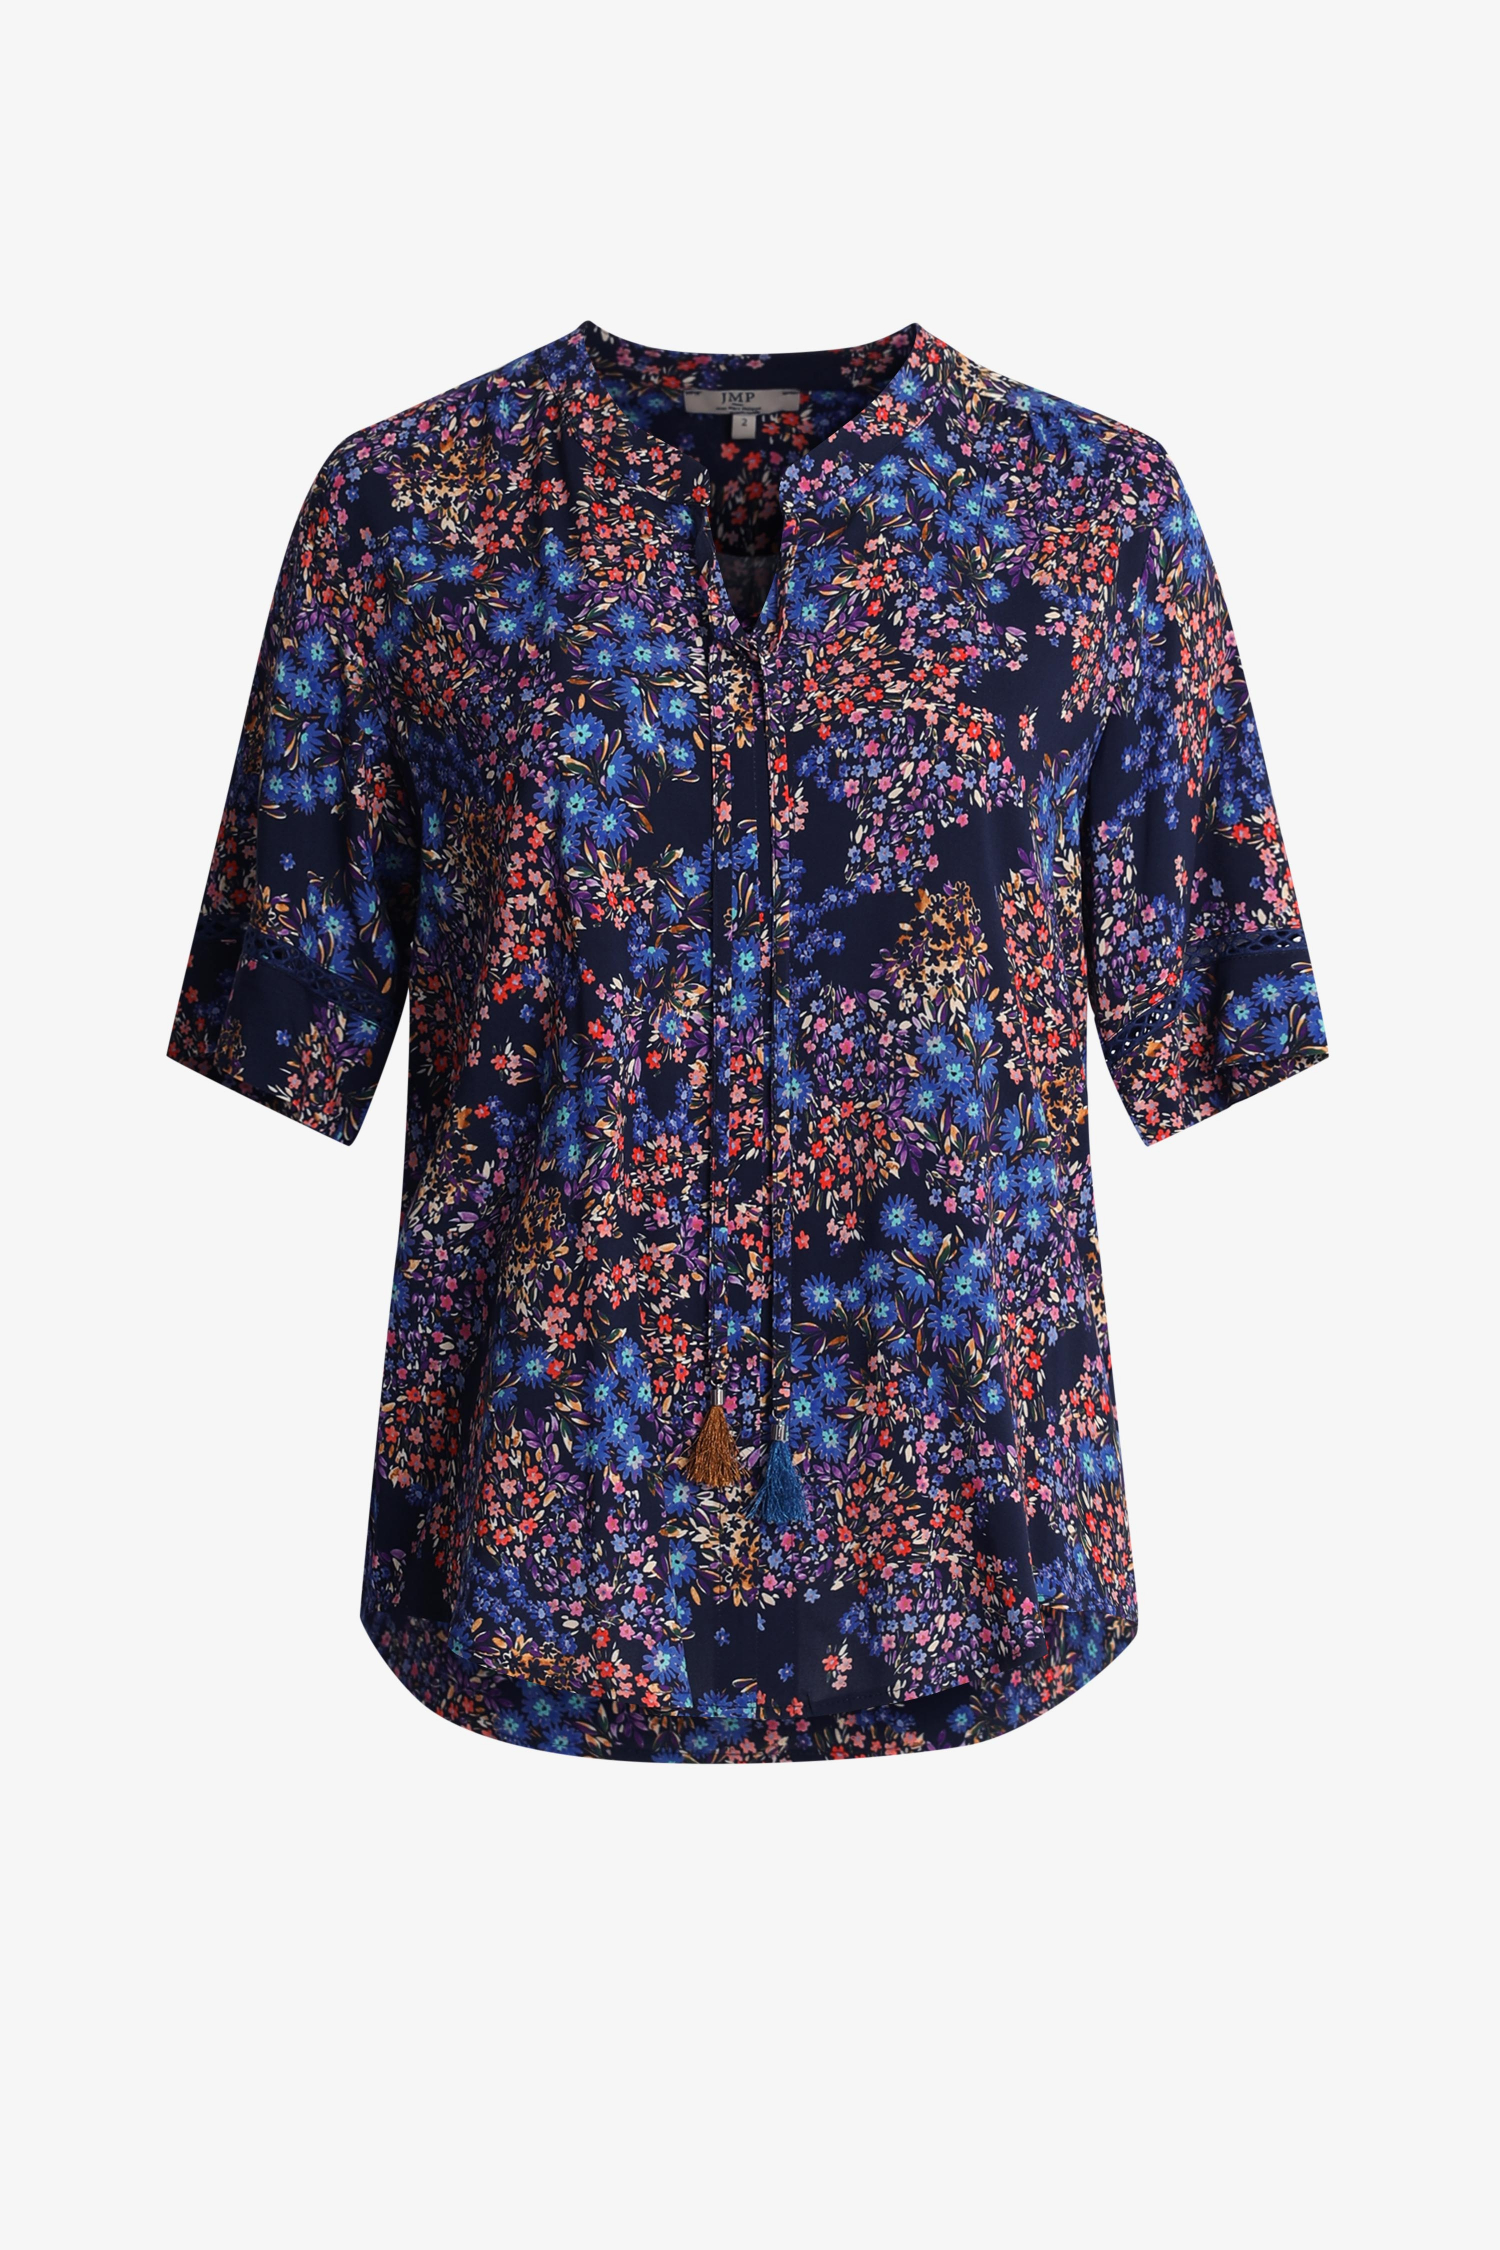 Mao collar printed blouse eco-responsible fabric